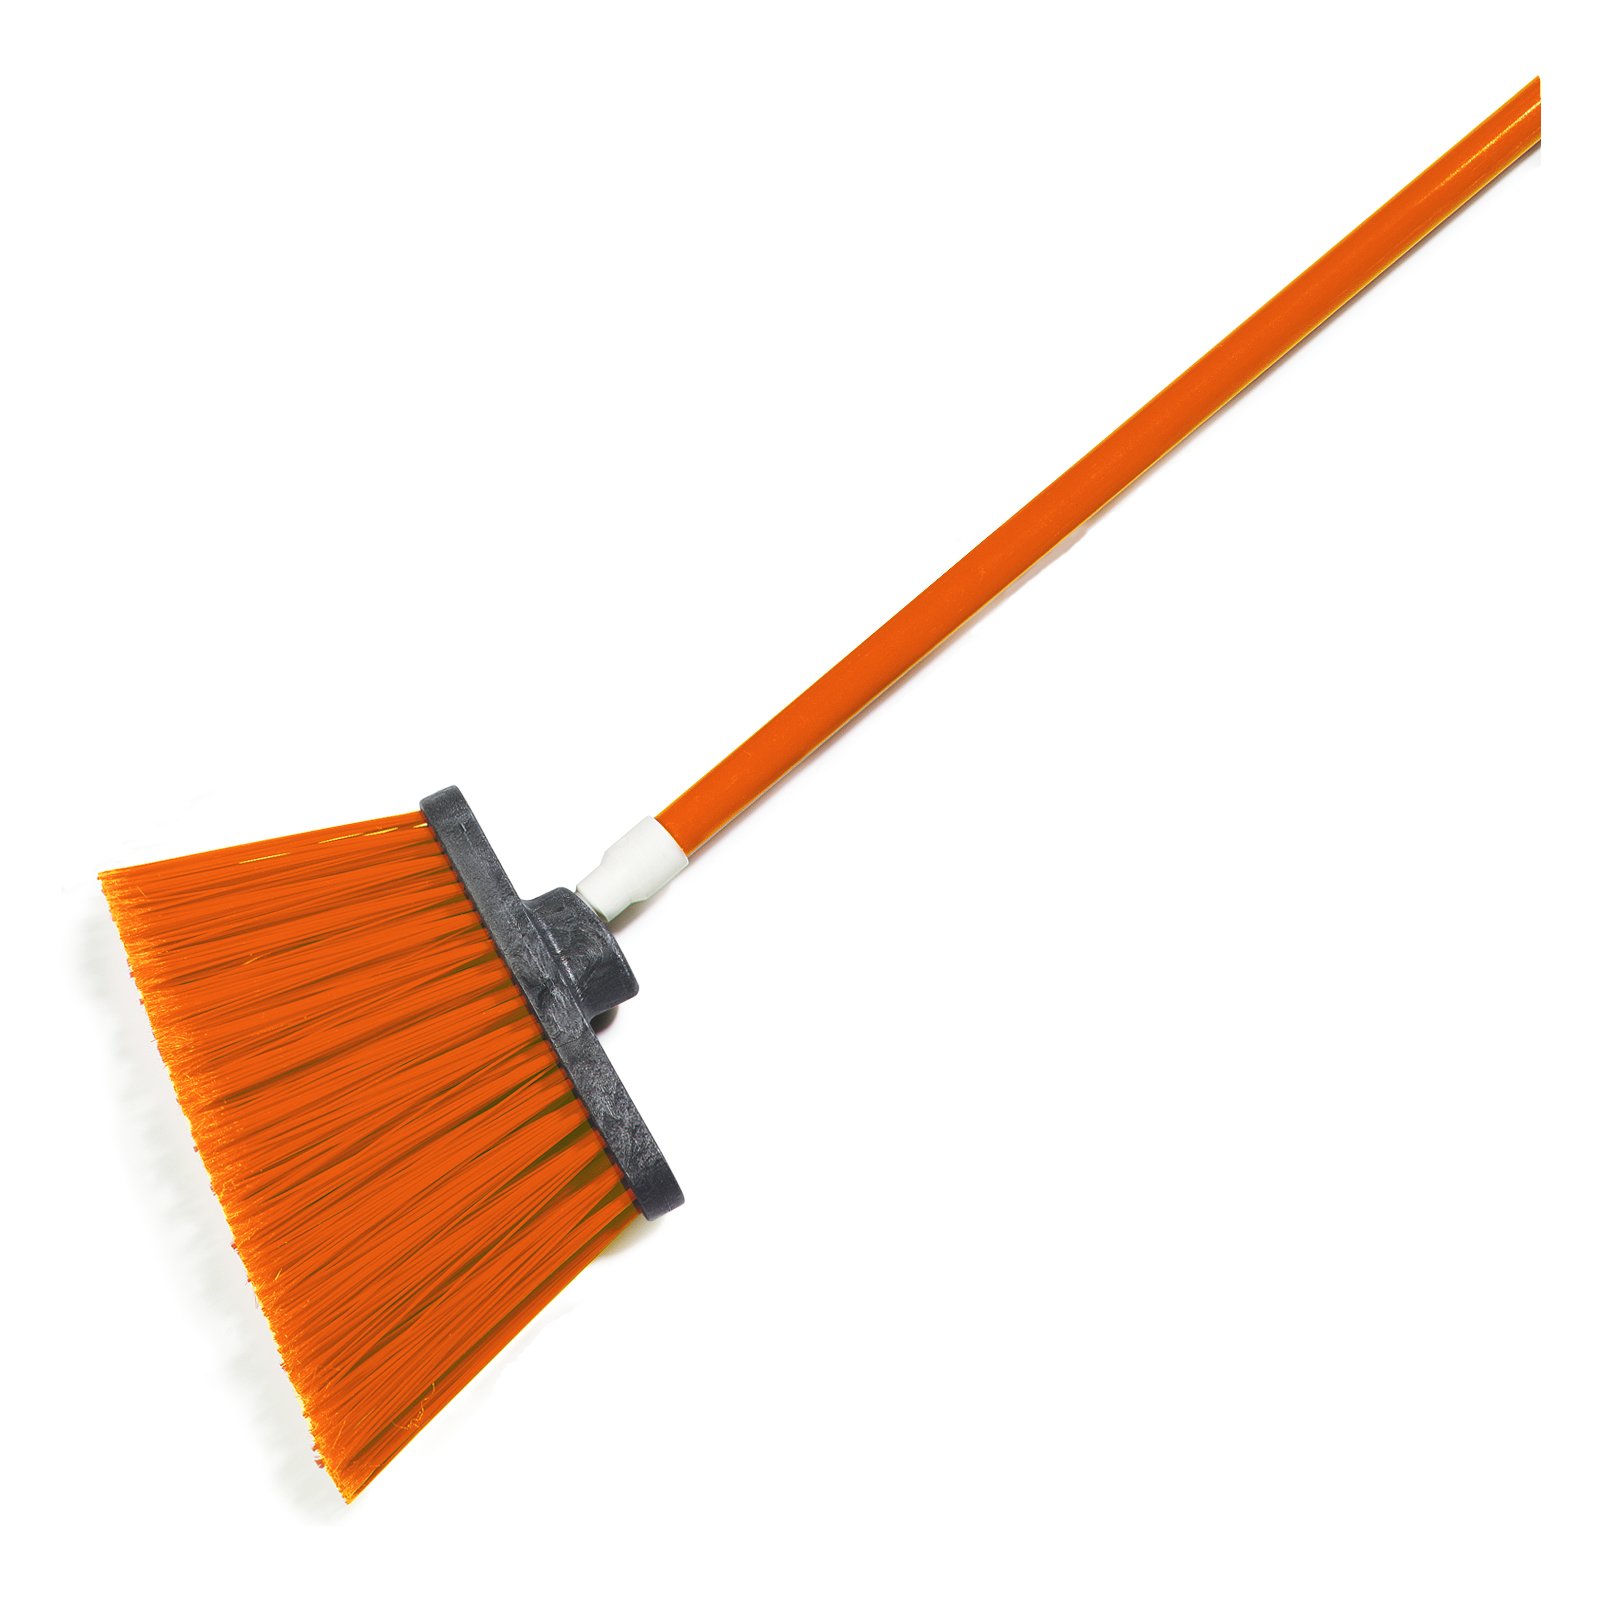 41082EC24 Spectrum Duo-Sweep
Angle Broom 56&quot;Long Orange
12/CS